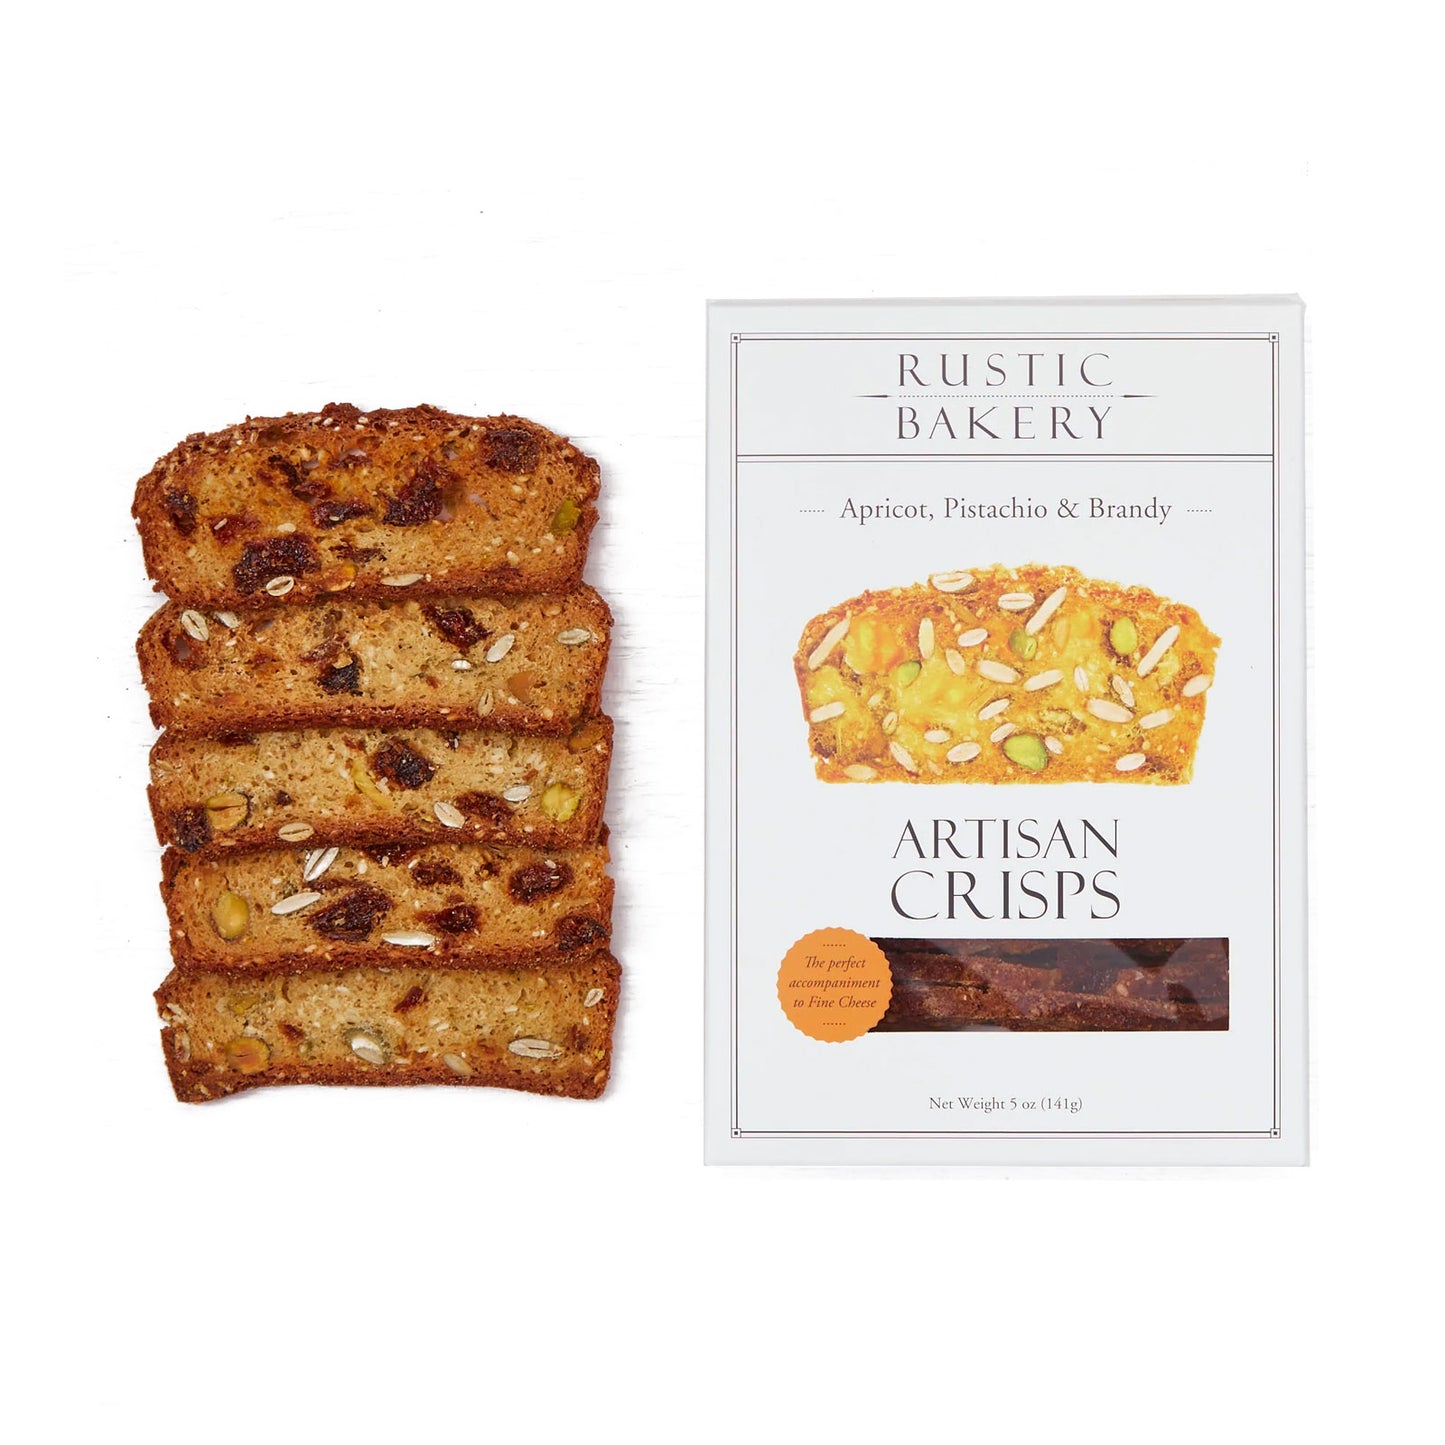 Apricot, Pistachio, & Brandy Artisan Crisps by Rustic Bakery